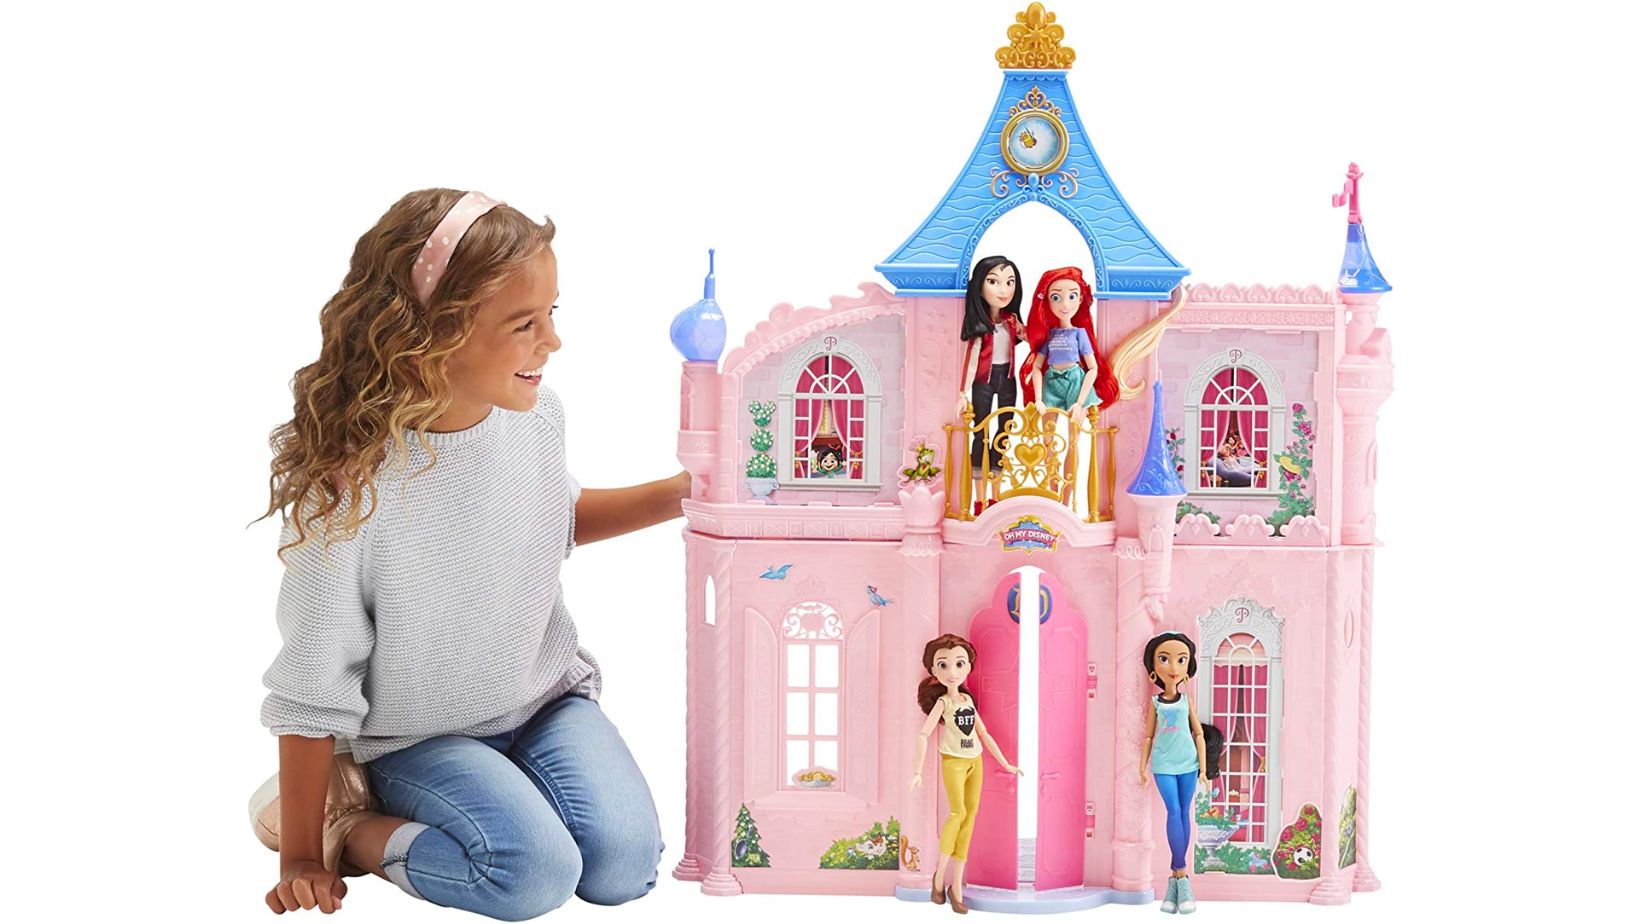 Disney Princess Castle Dollhouse at Amazon